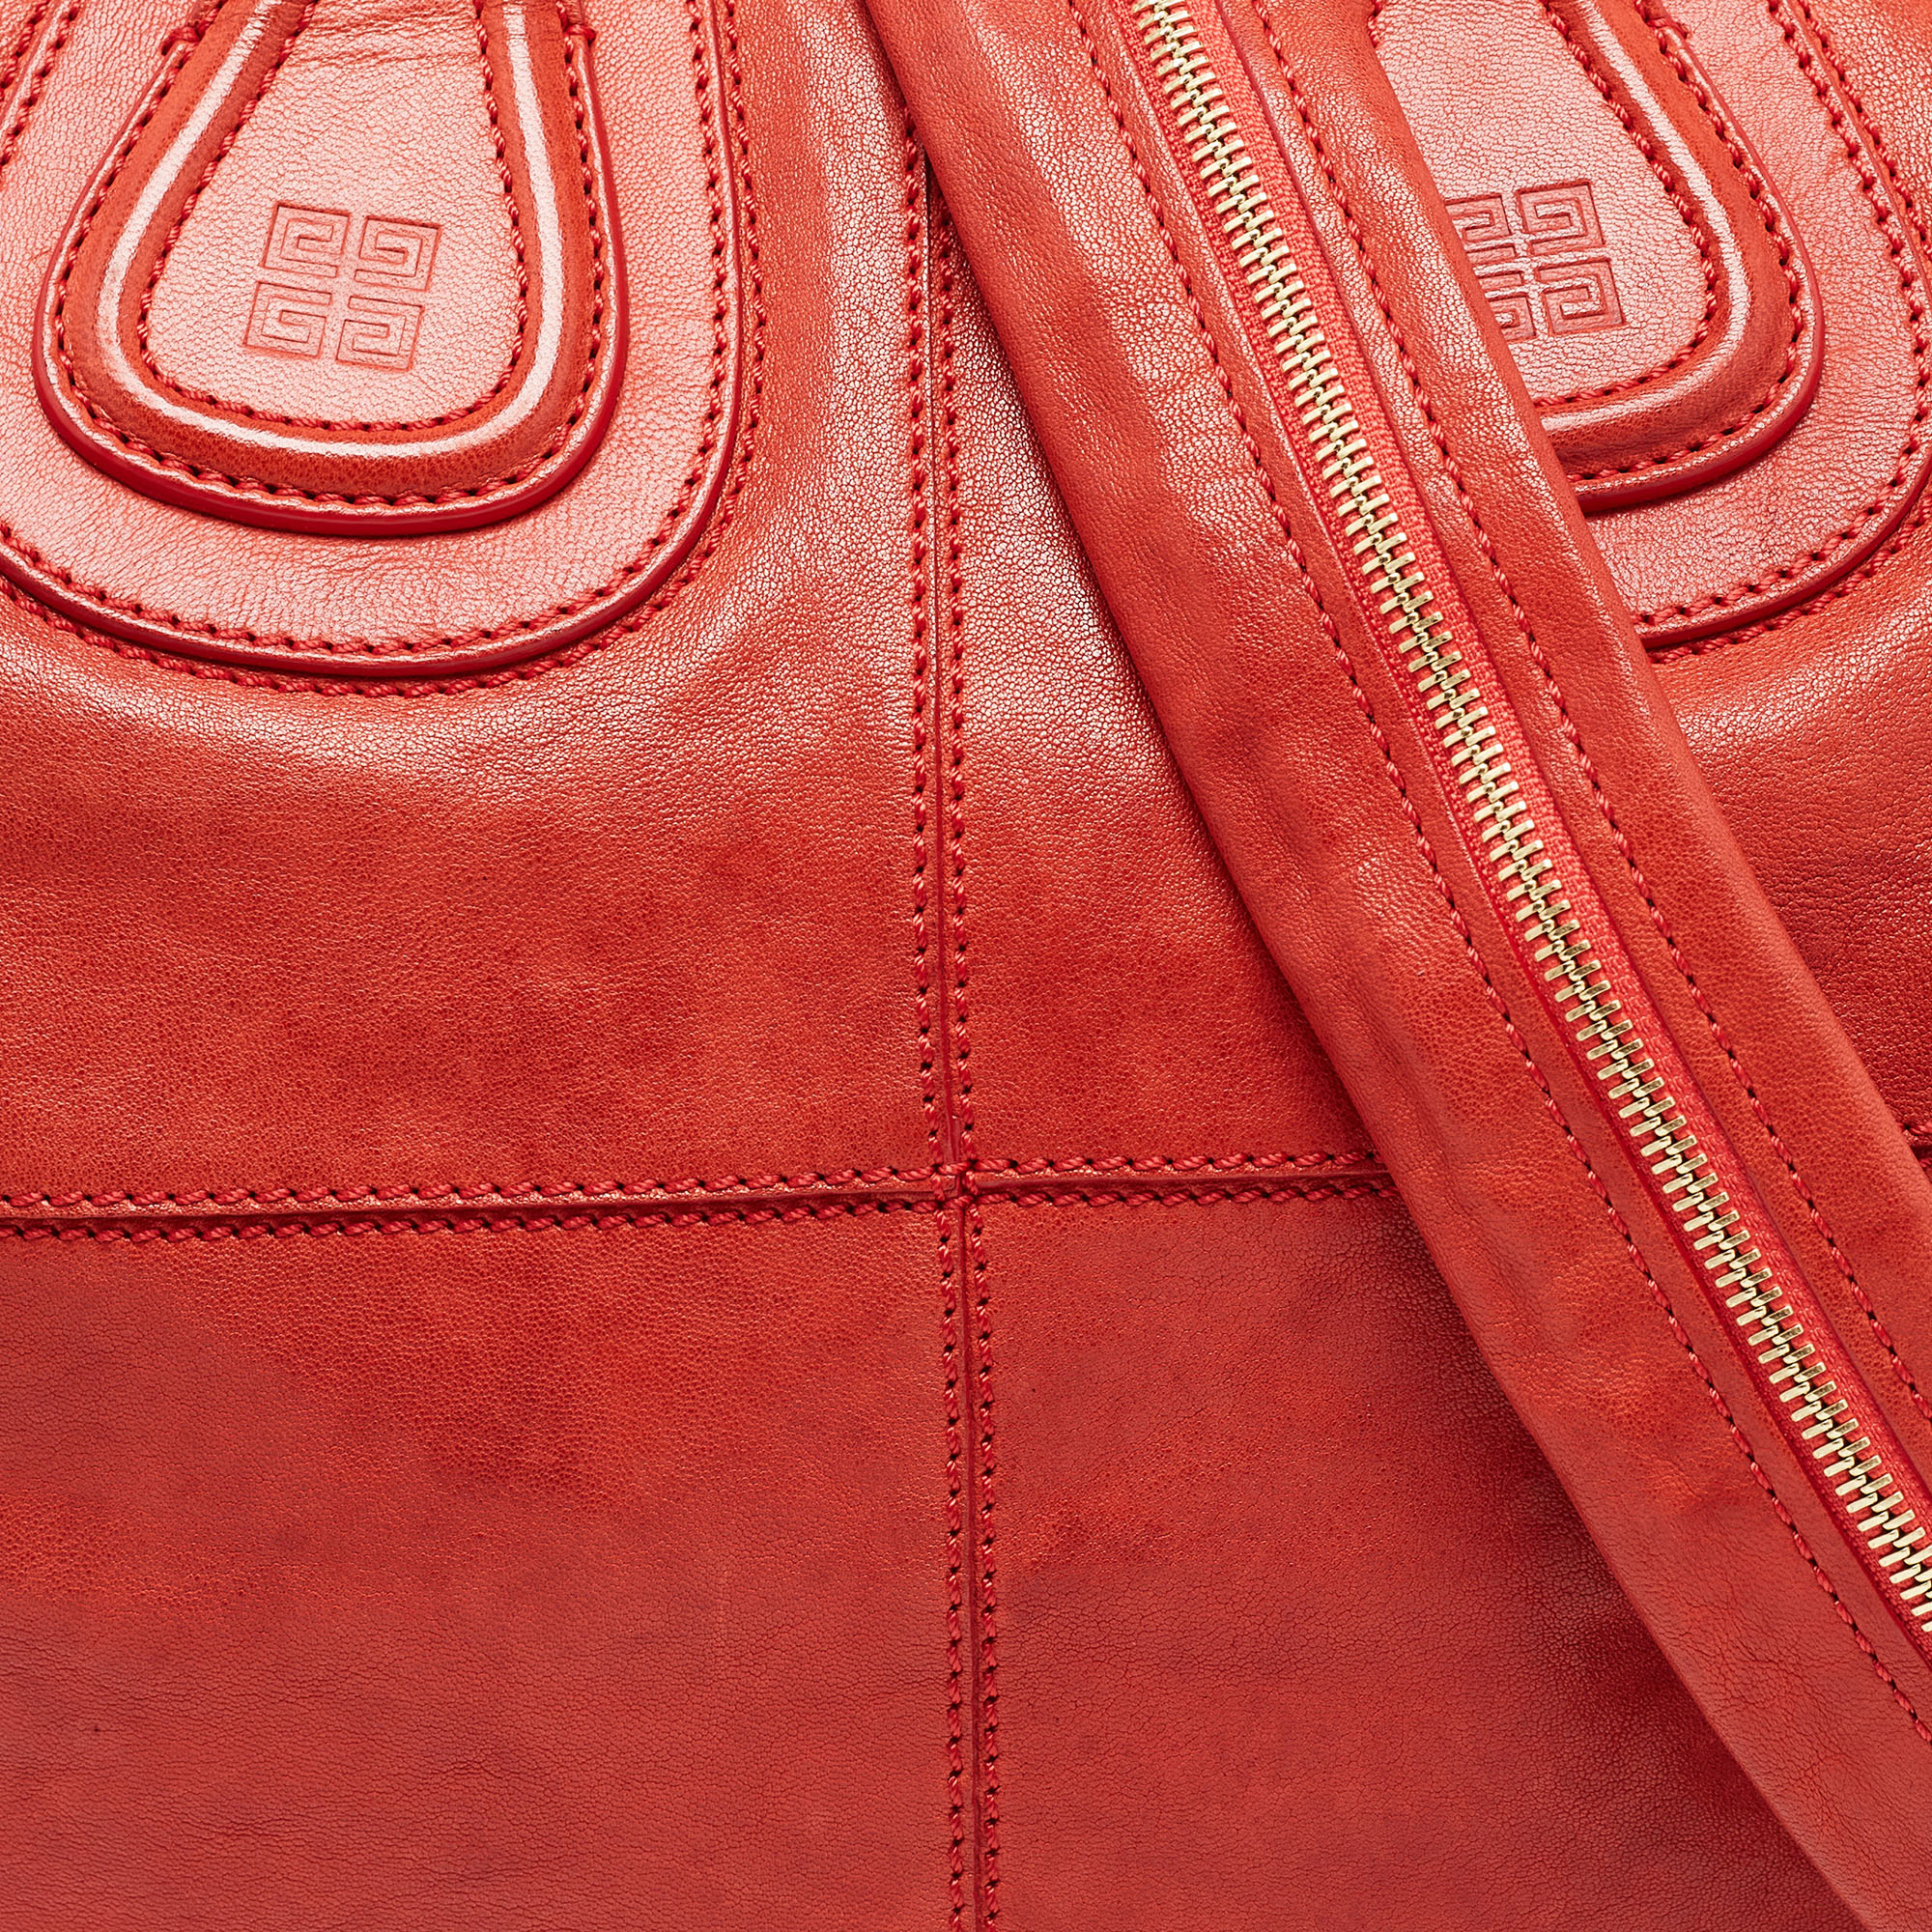 Givenchy Red Leather Medium Nightingale Satchel